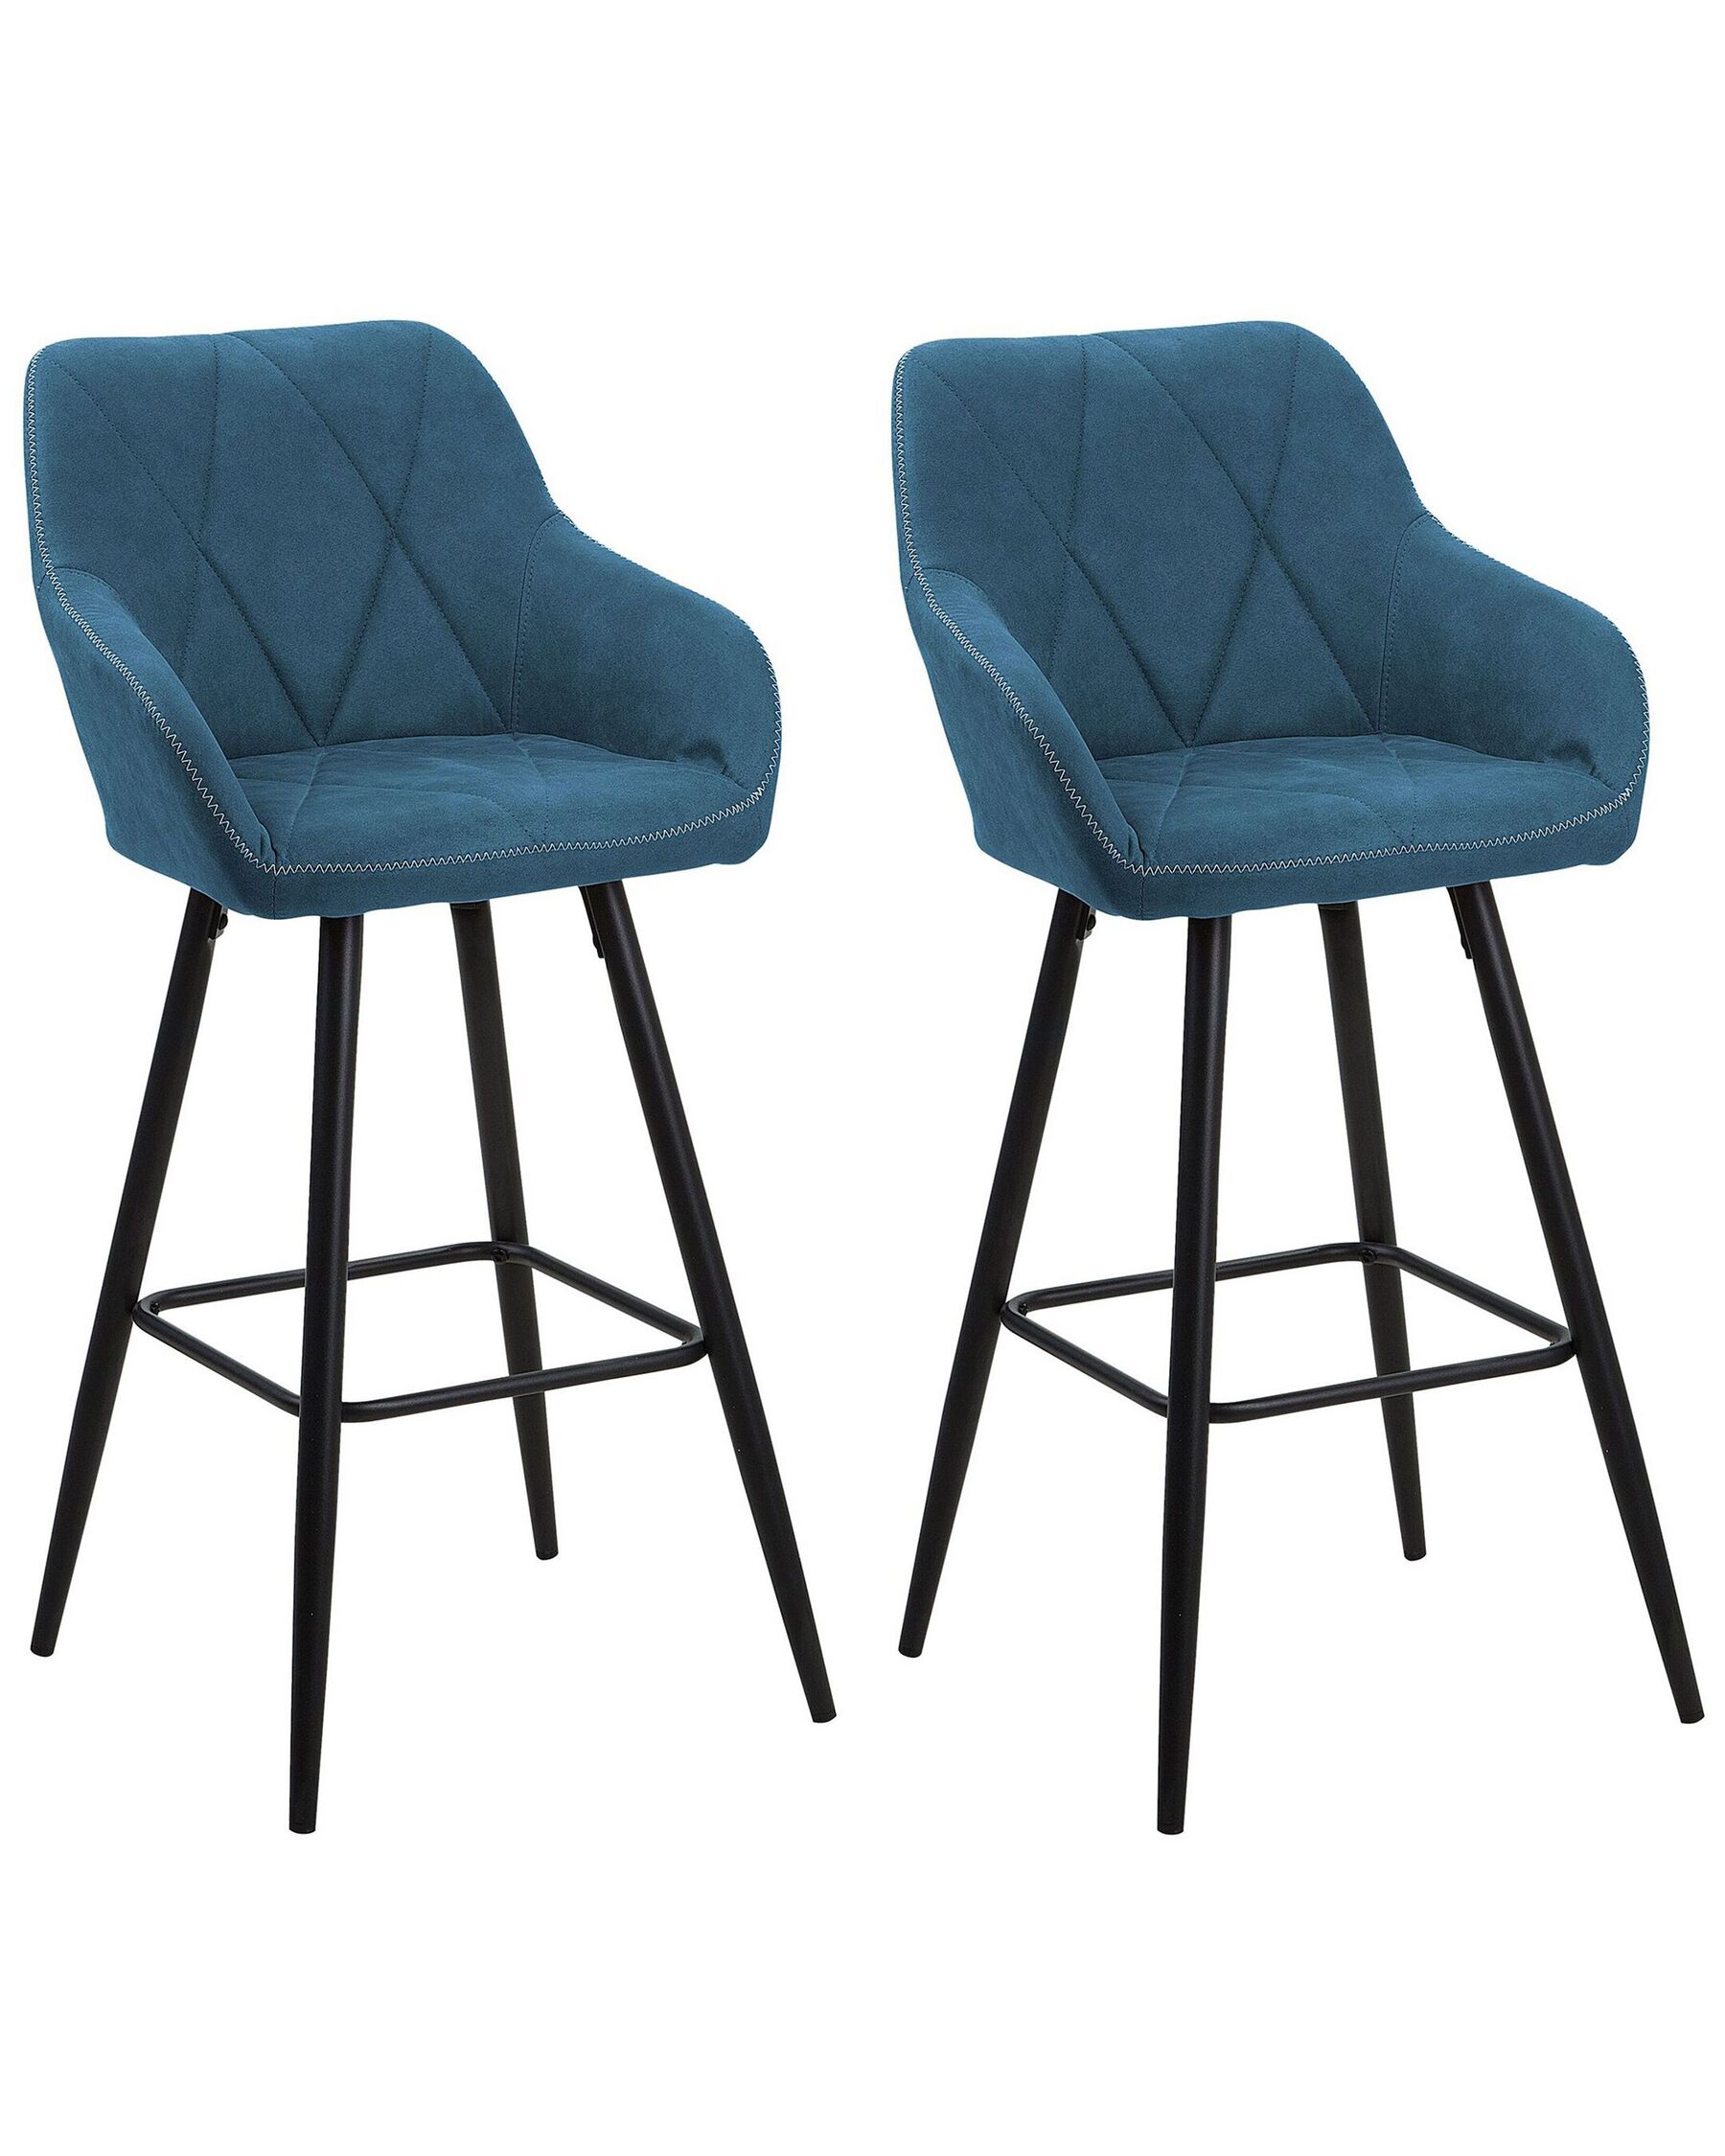 Conjunto de 2 sillas de bar de poliéster azul turquesa/negro DARIEN_724468